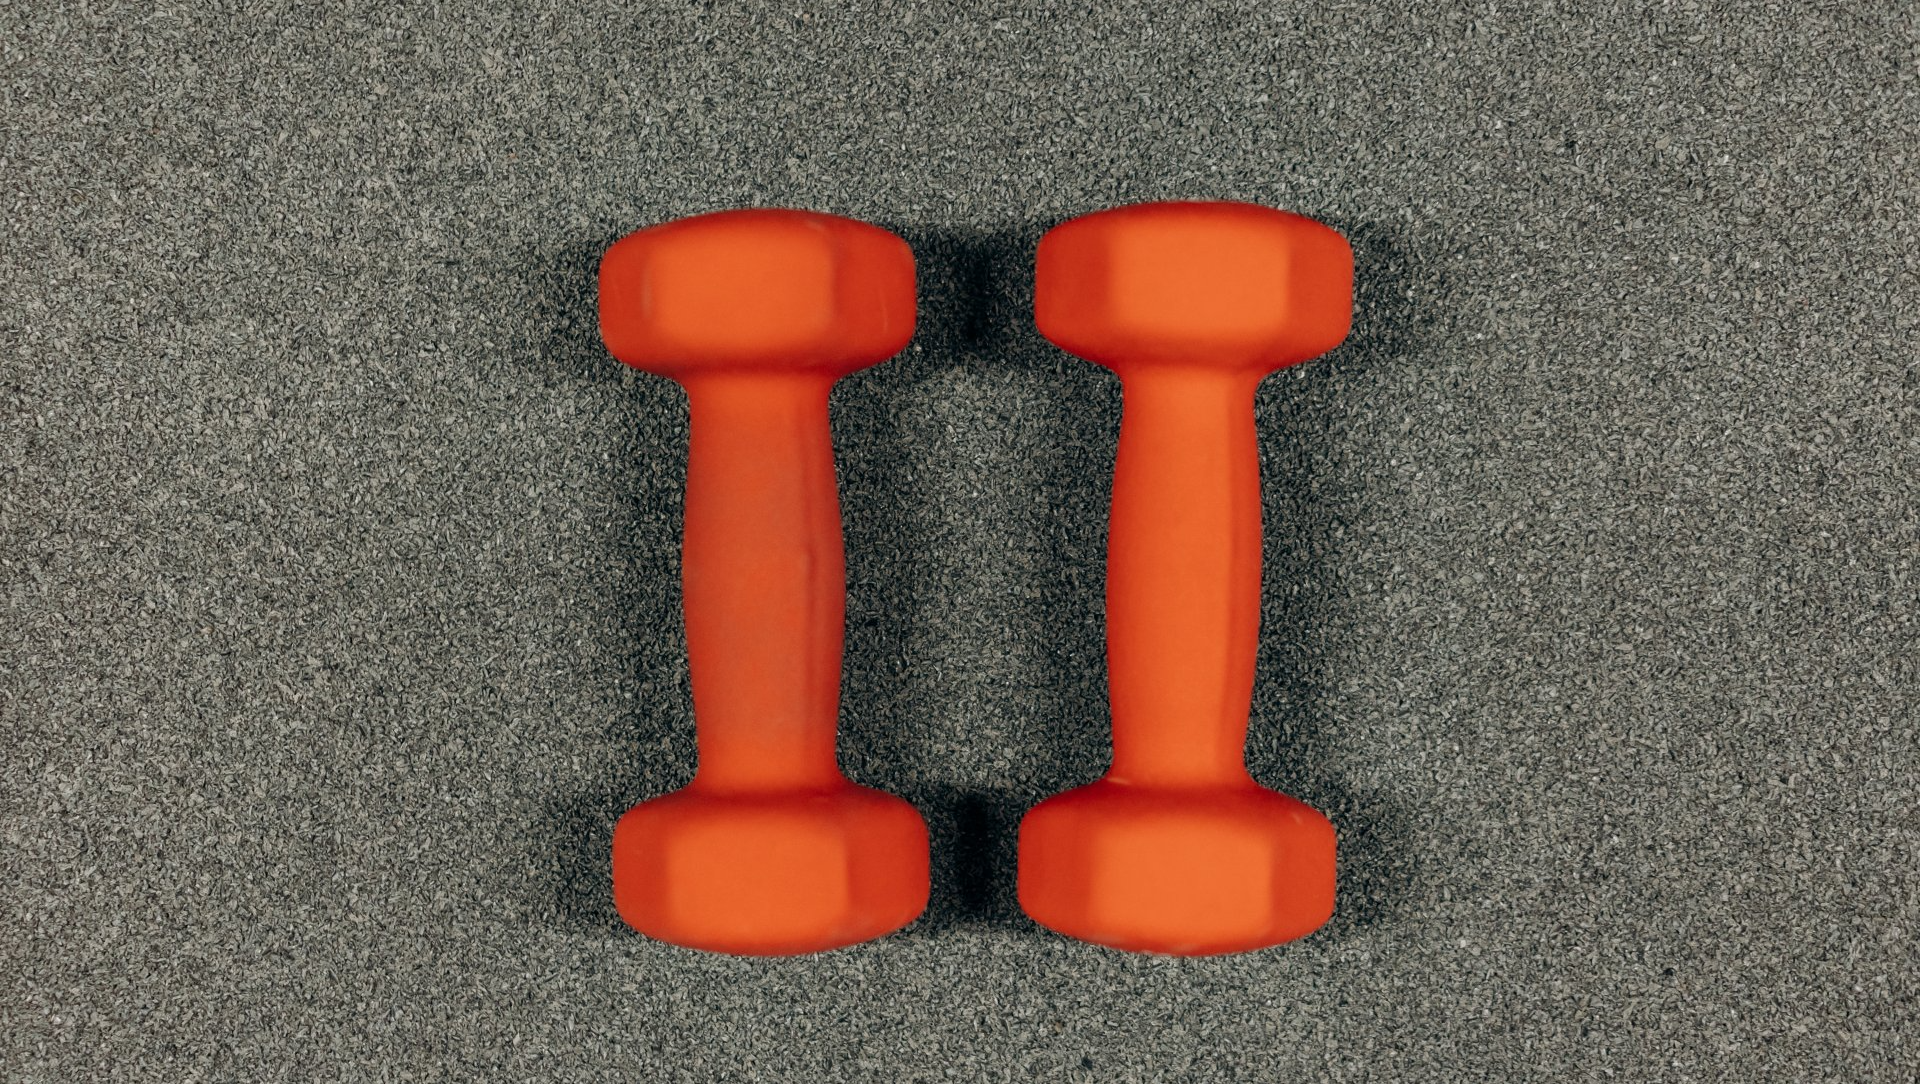 Two orange hand weights laying on grey carpet.